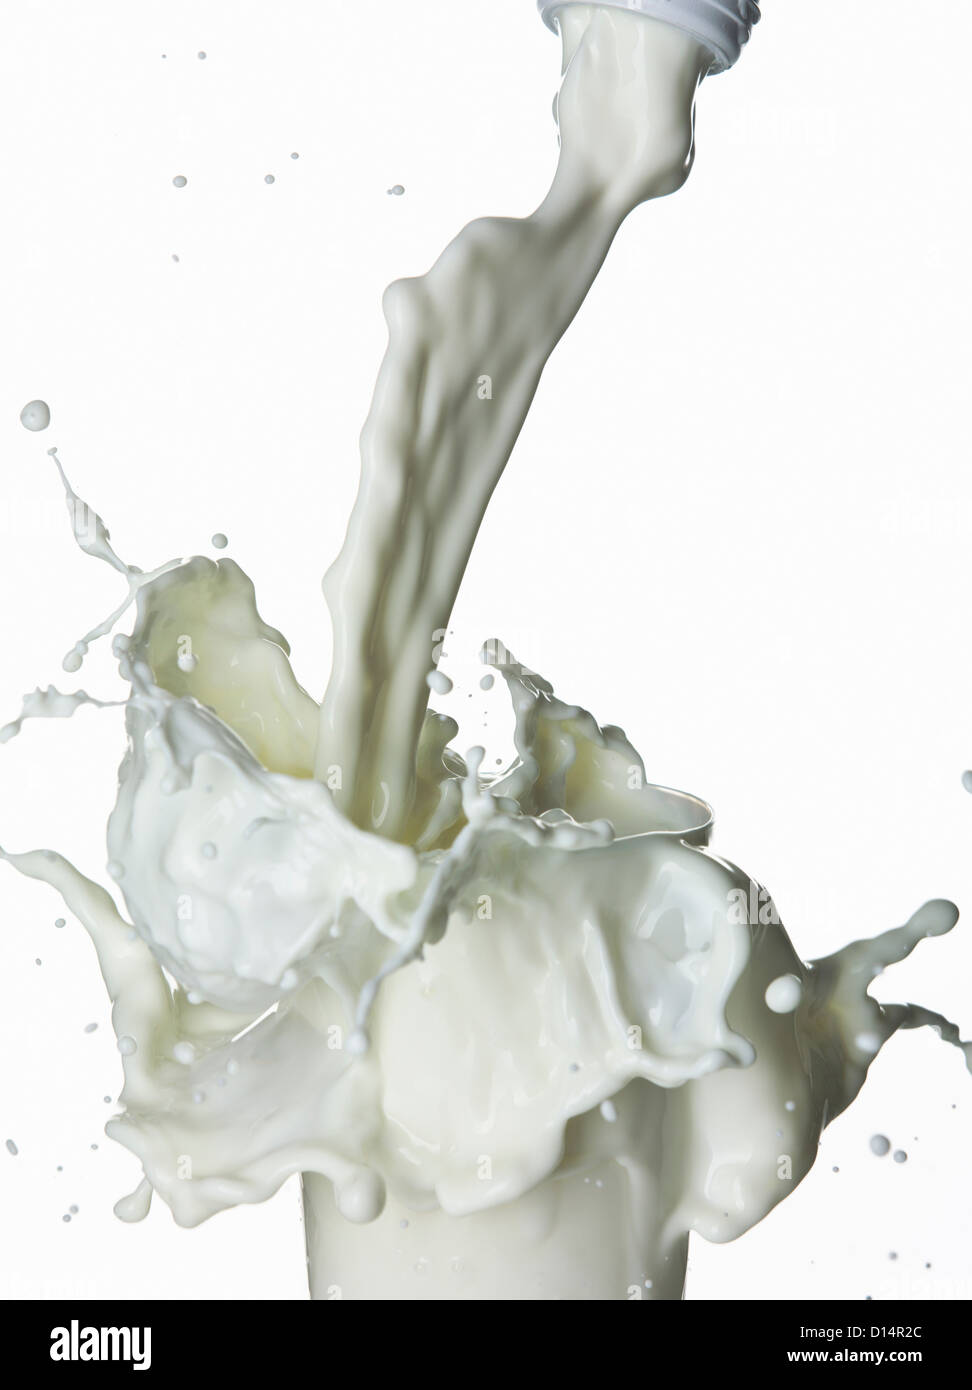 Milk splashing into glass Stock Photo